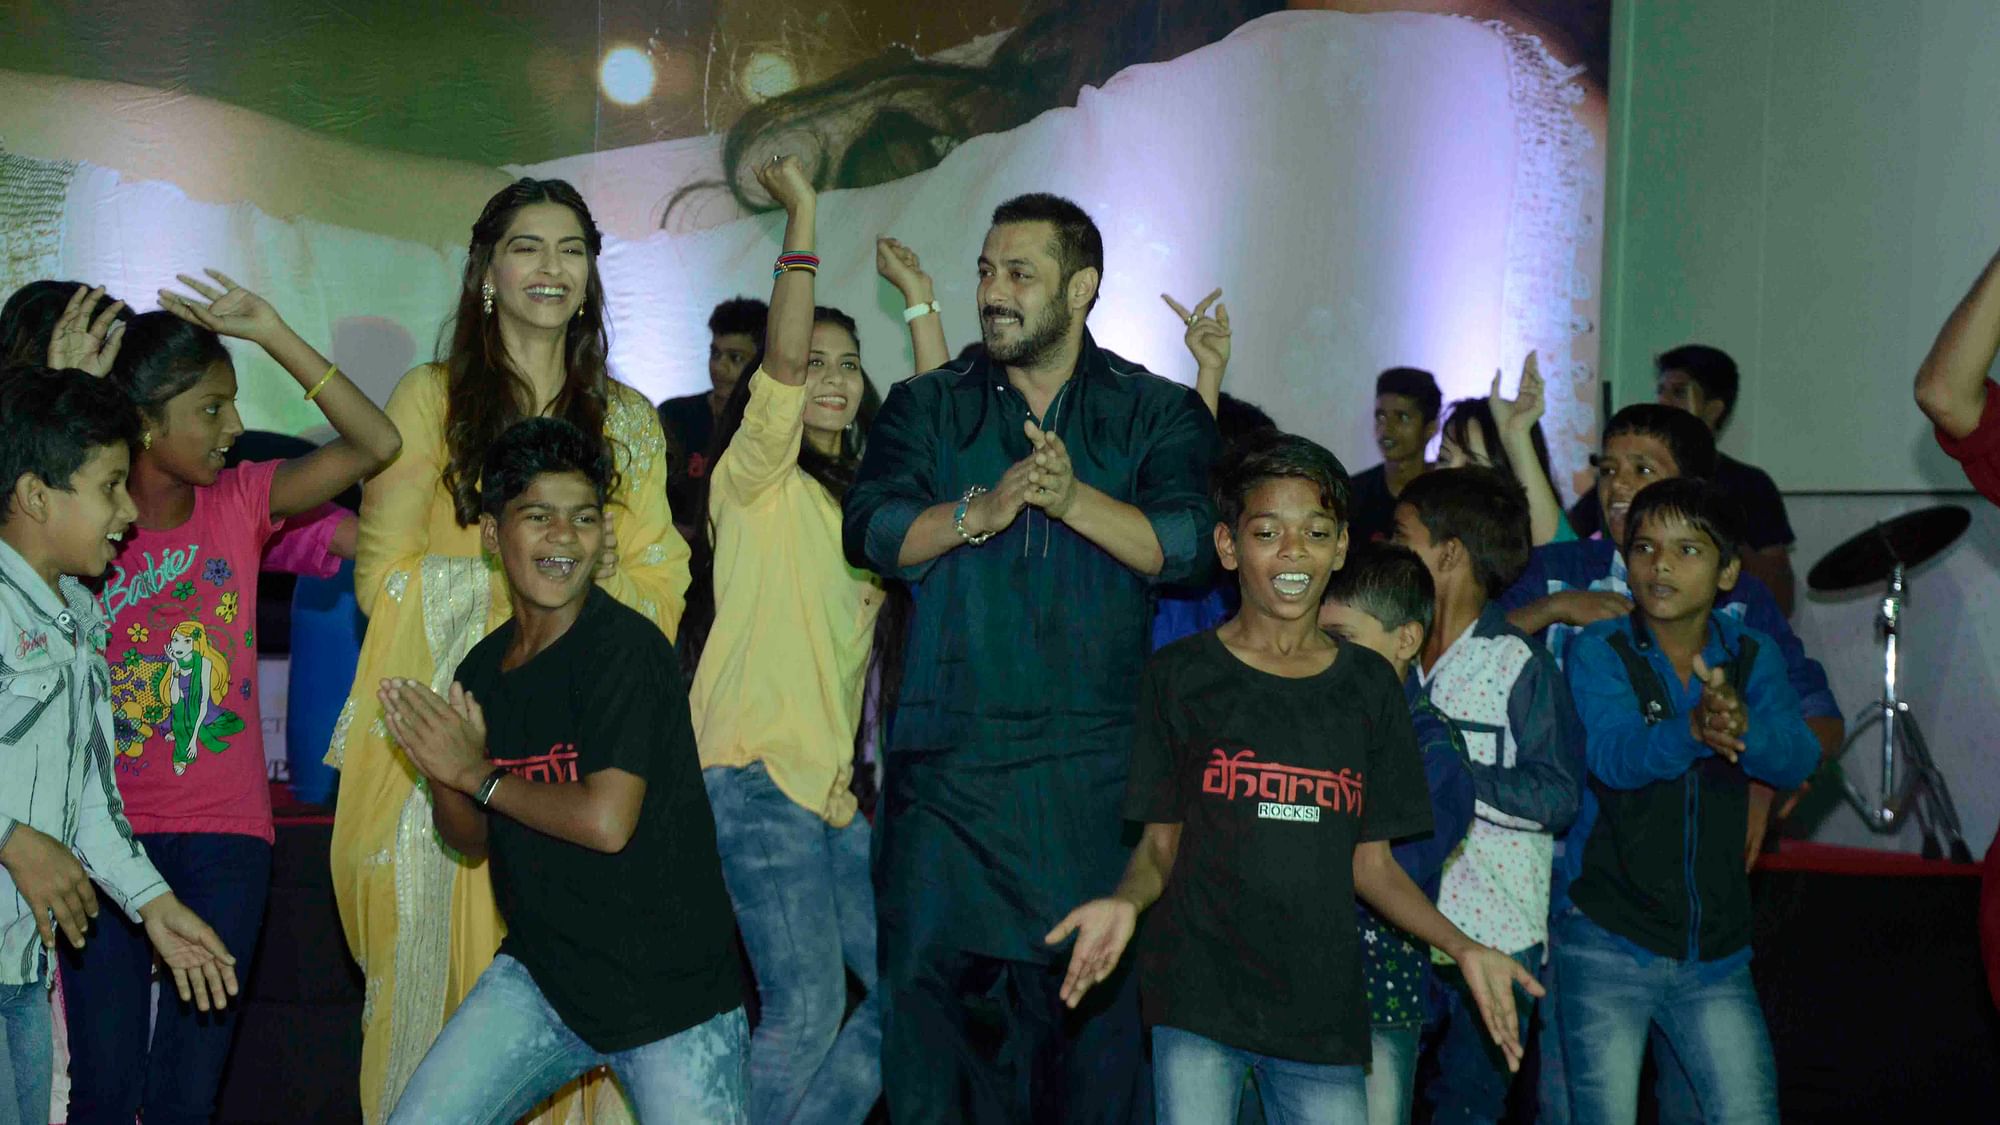 Salman Khan and Sonam Kapoor dancing with members of the Dharavi Rocks Band. (Photo: Yogen Shah)